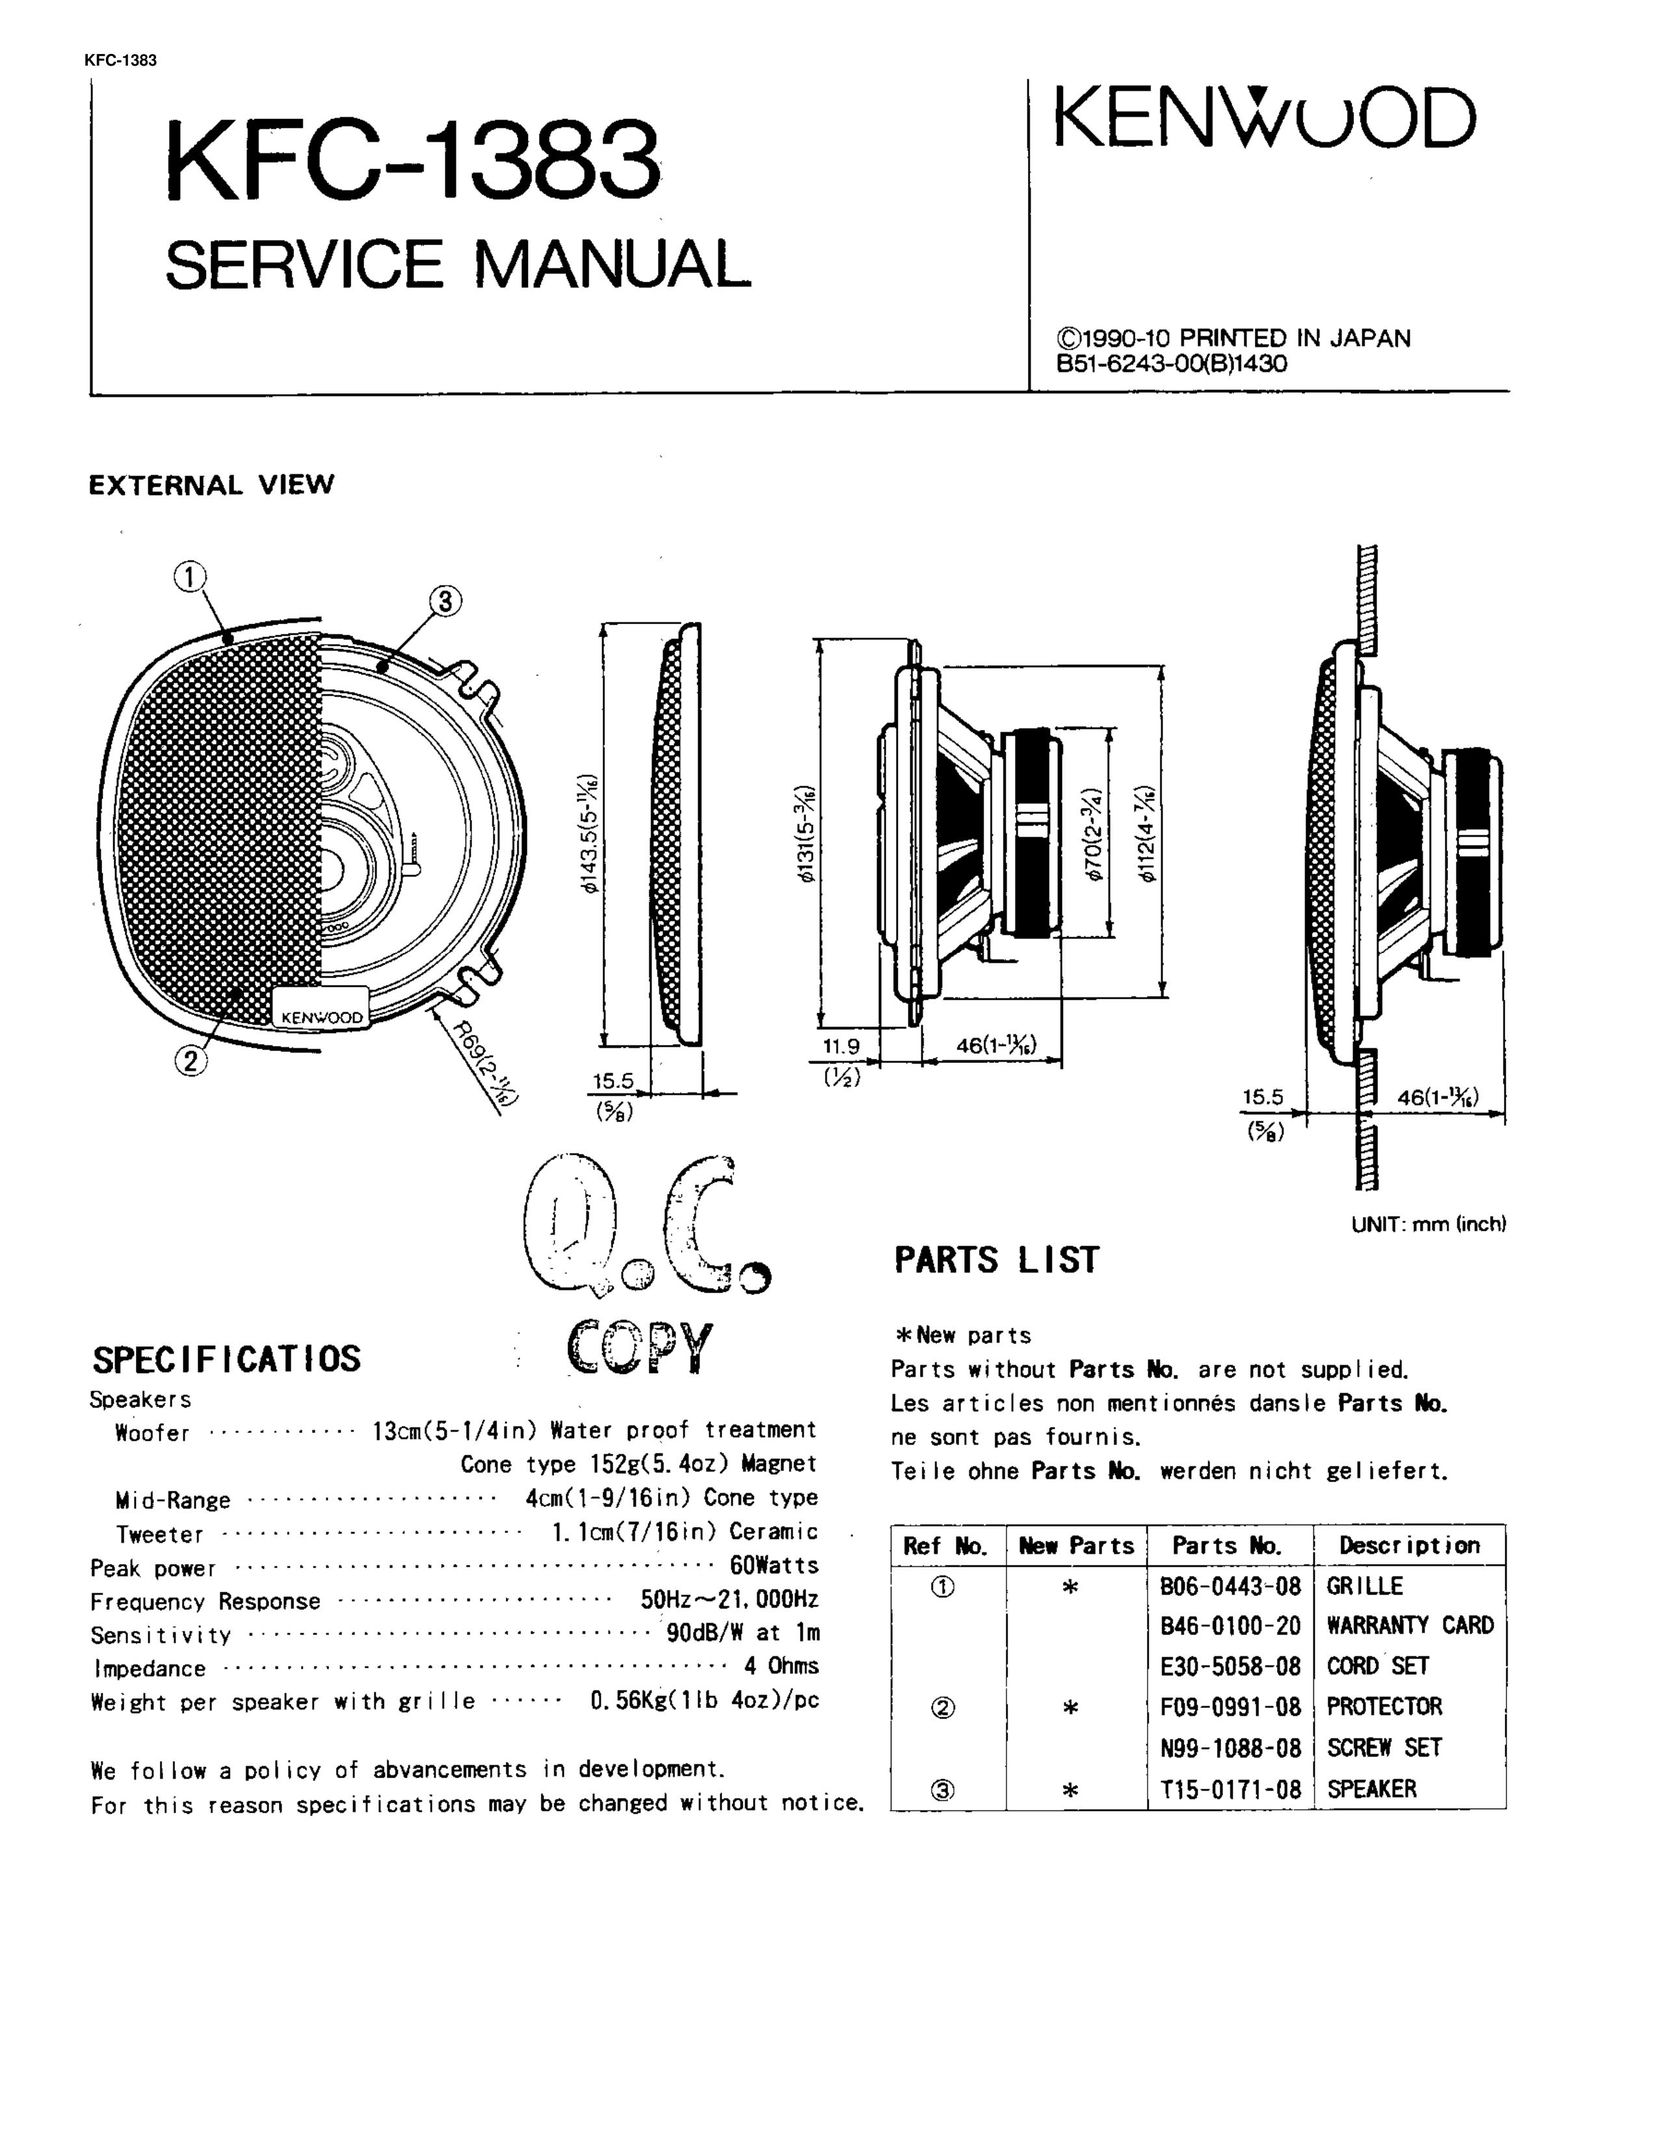 Kenwood KFC-1383 Car Speaker User Manual